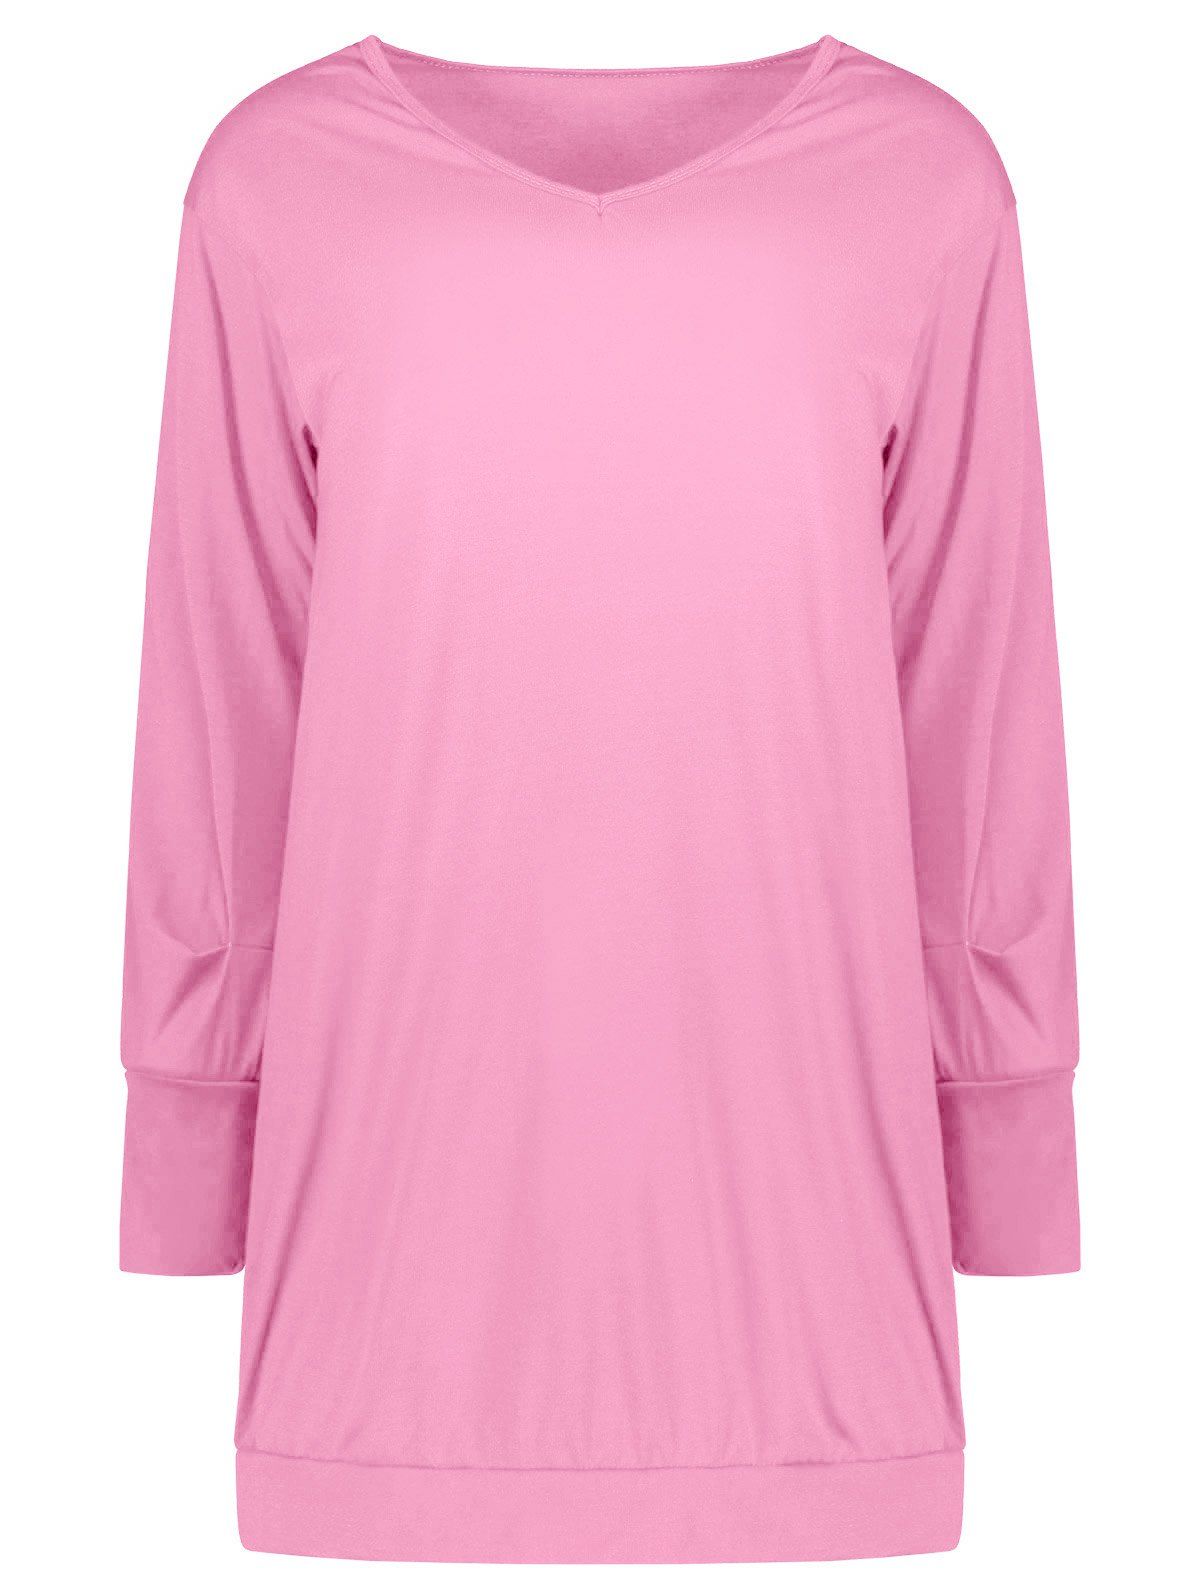 Plain Solid Color Drop Shoulder Pocket Tunic Tee Dress - PINK M